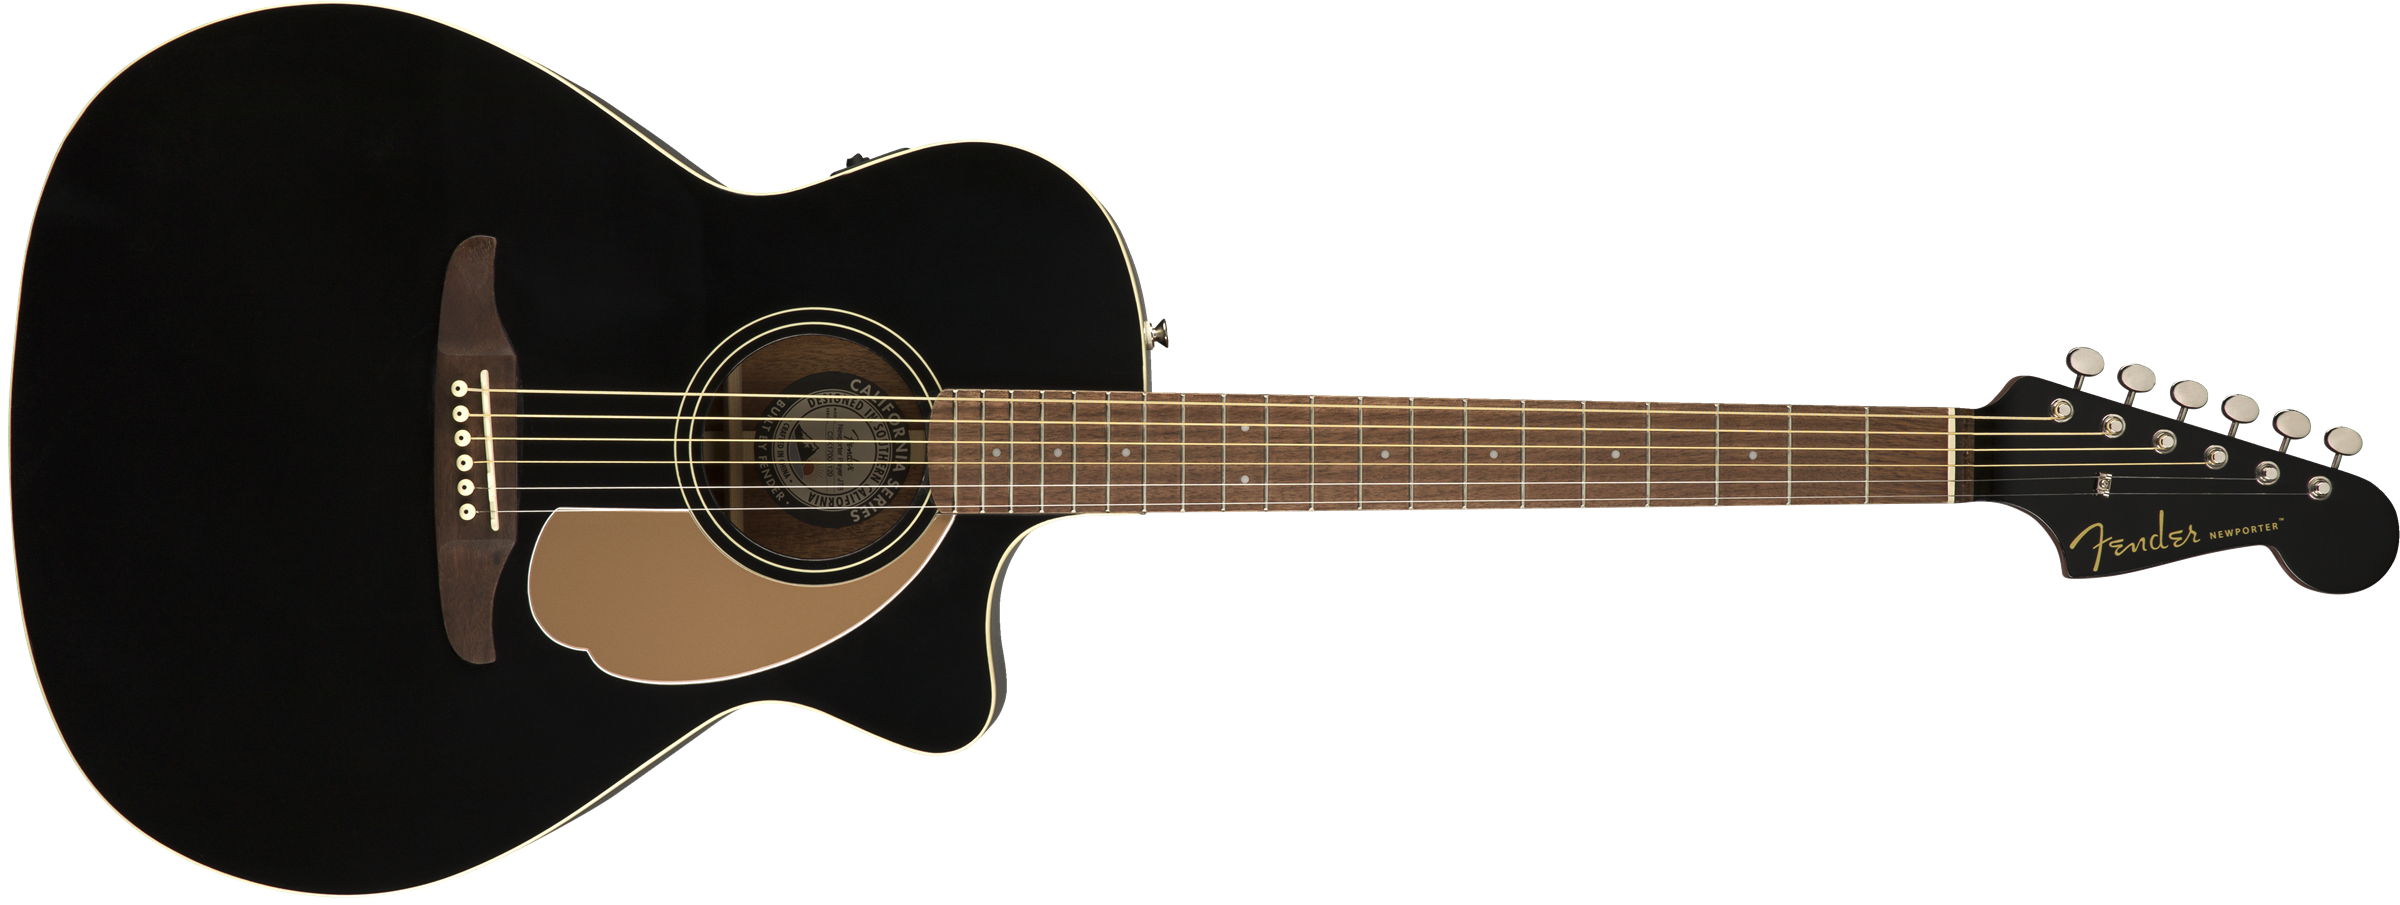 Fender Newporter Player - Jetty Black - Acoustic guitar & electro - Variation 1